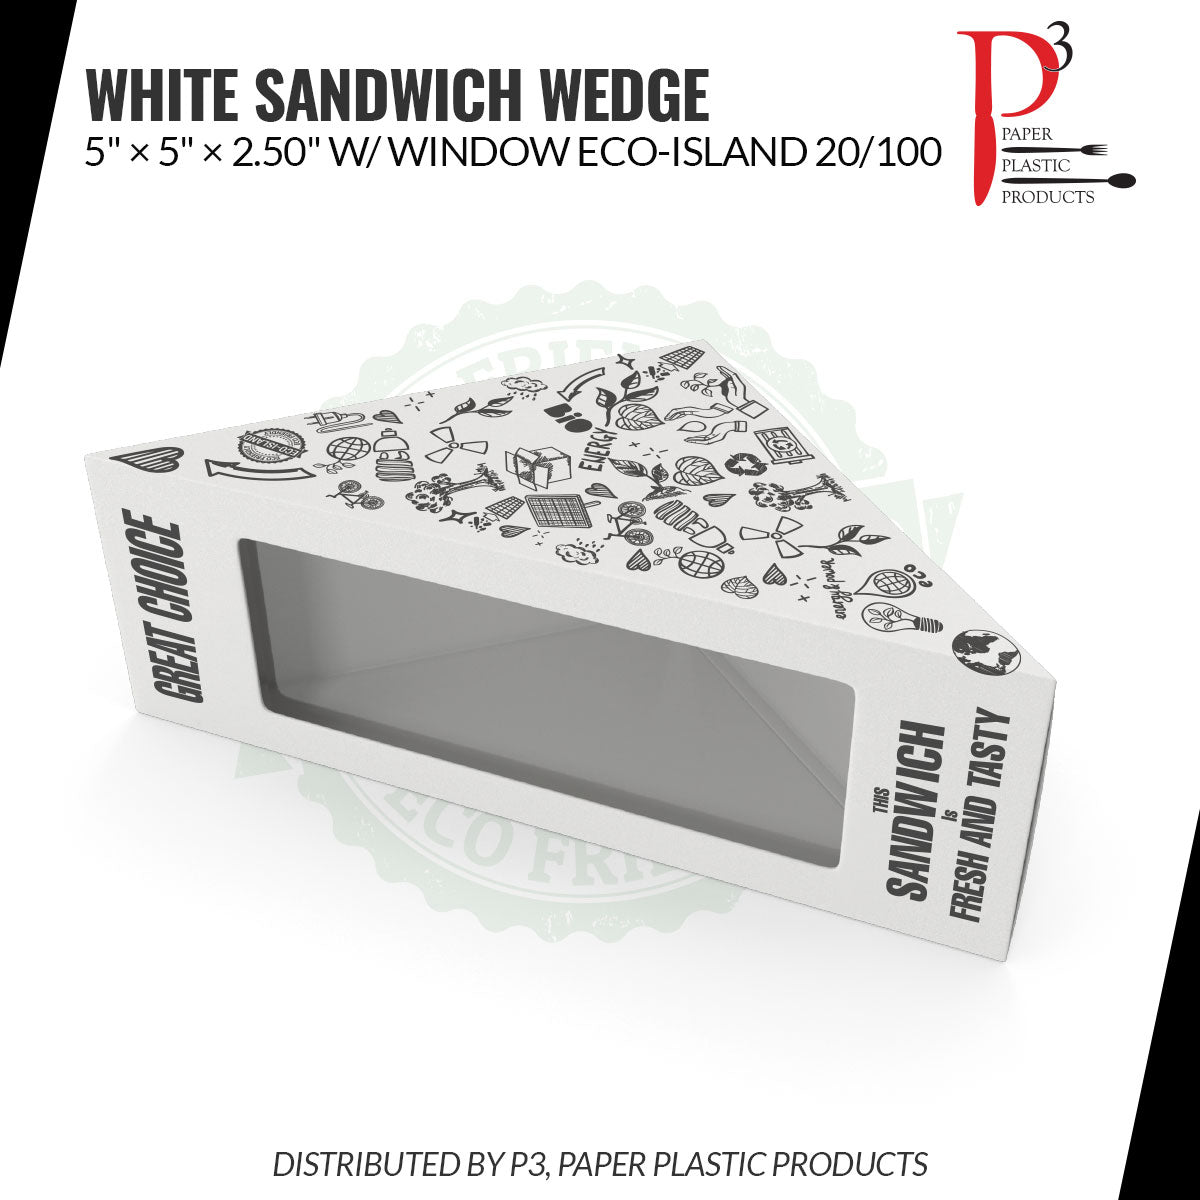 Sandwich Wedge with window 5